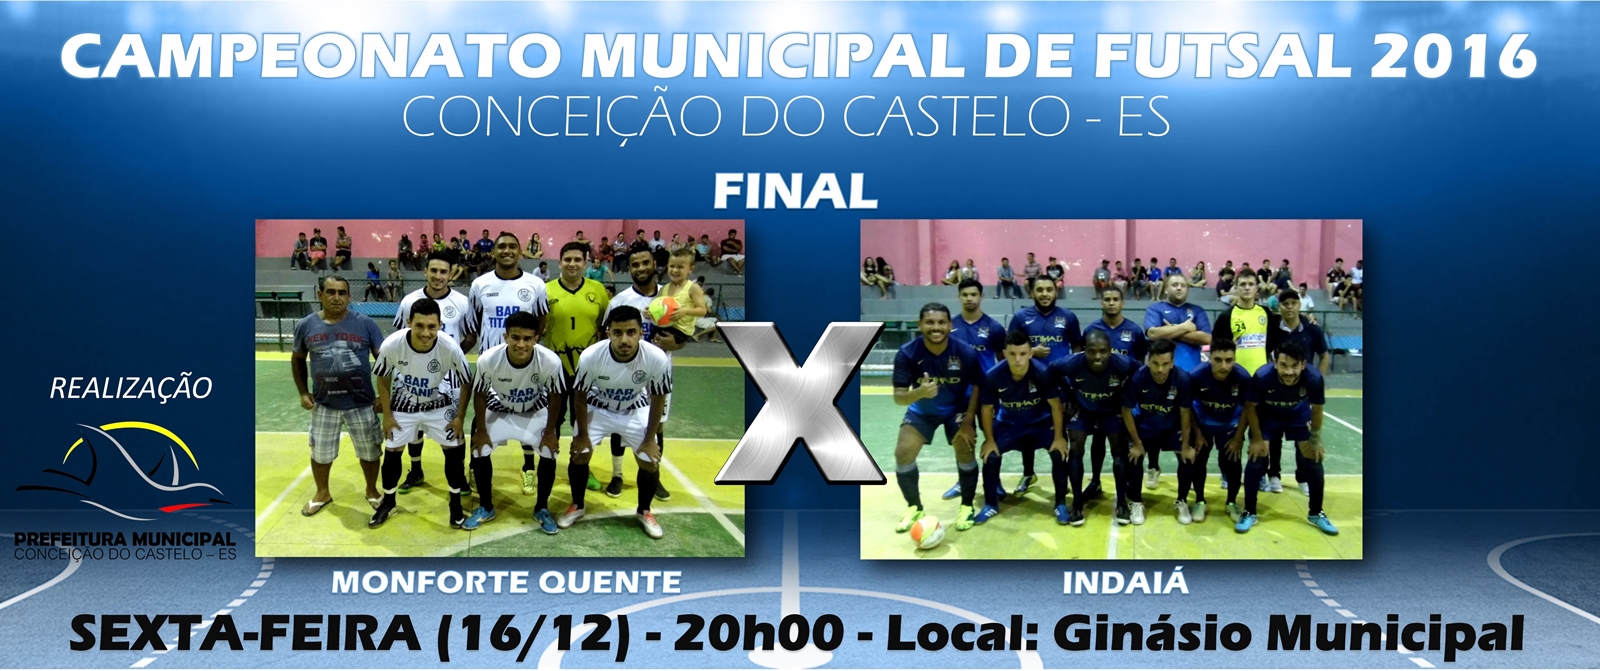 Monforte Quente e Indaiá disputam a grande final do Municipal de Futsal 2016 nesta sexta-feira (16)